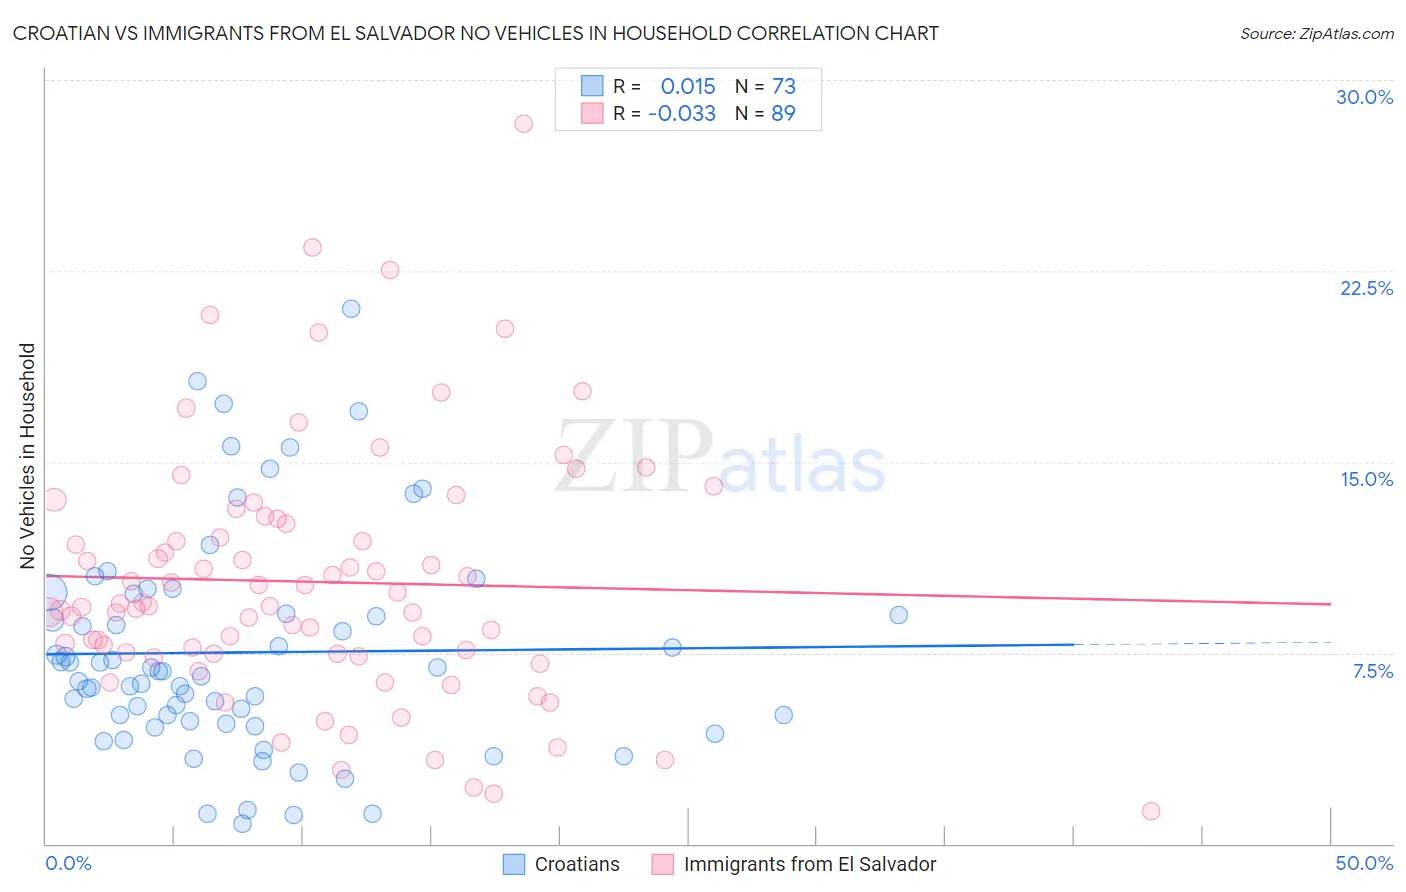 Croatian vs Immigrants from El Salvador No Vehicles in Household